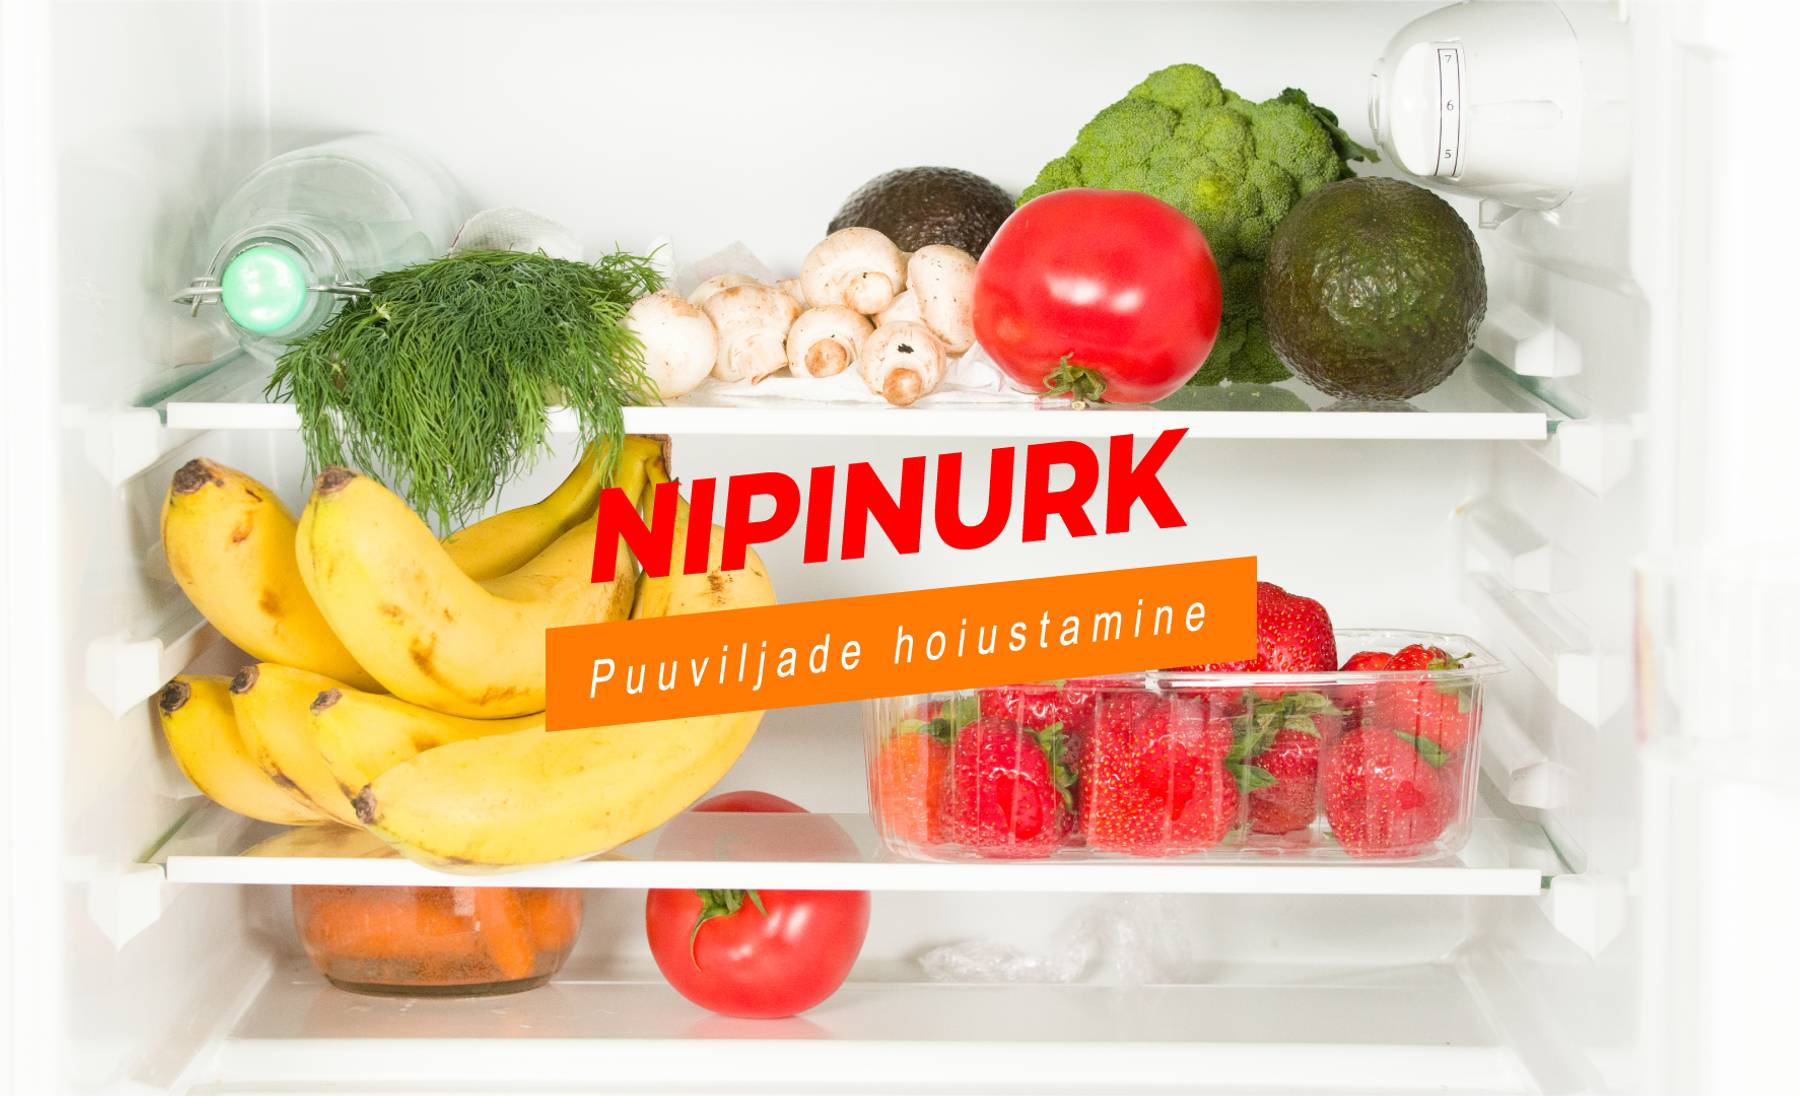 Nipinurk